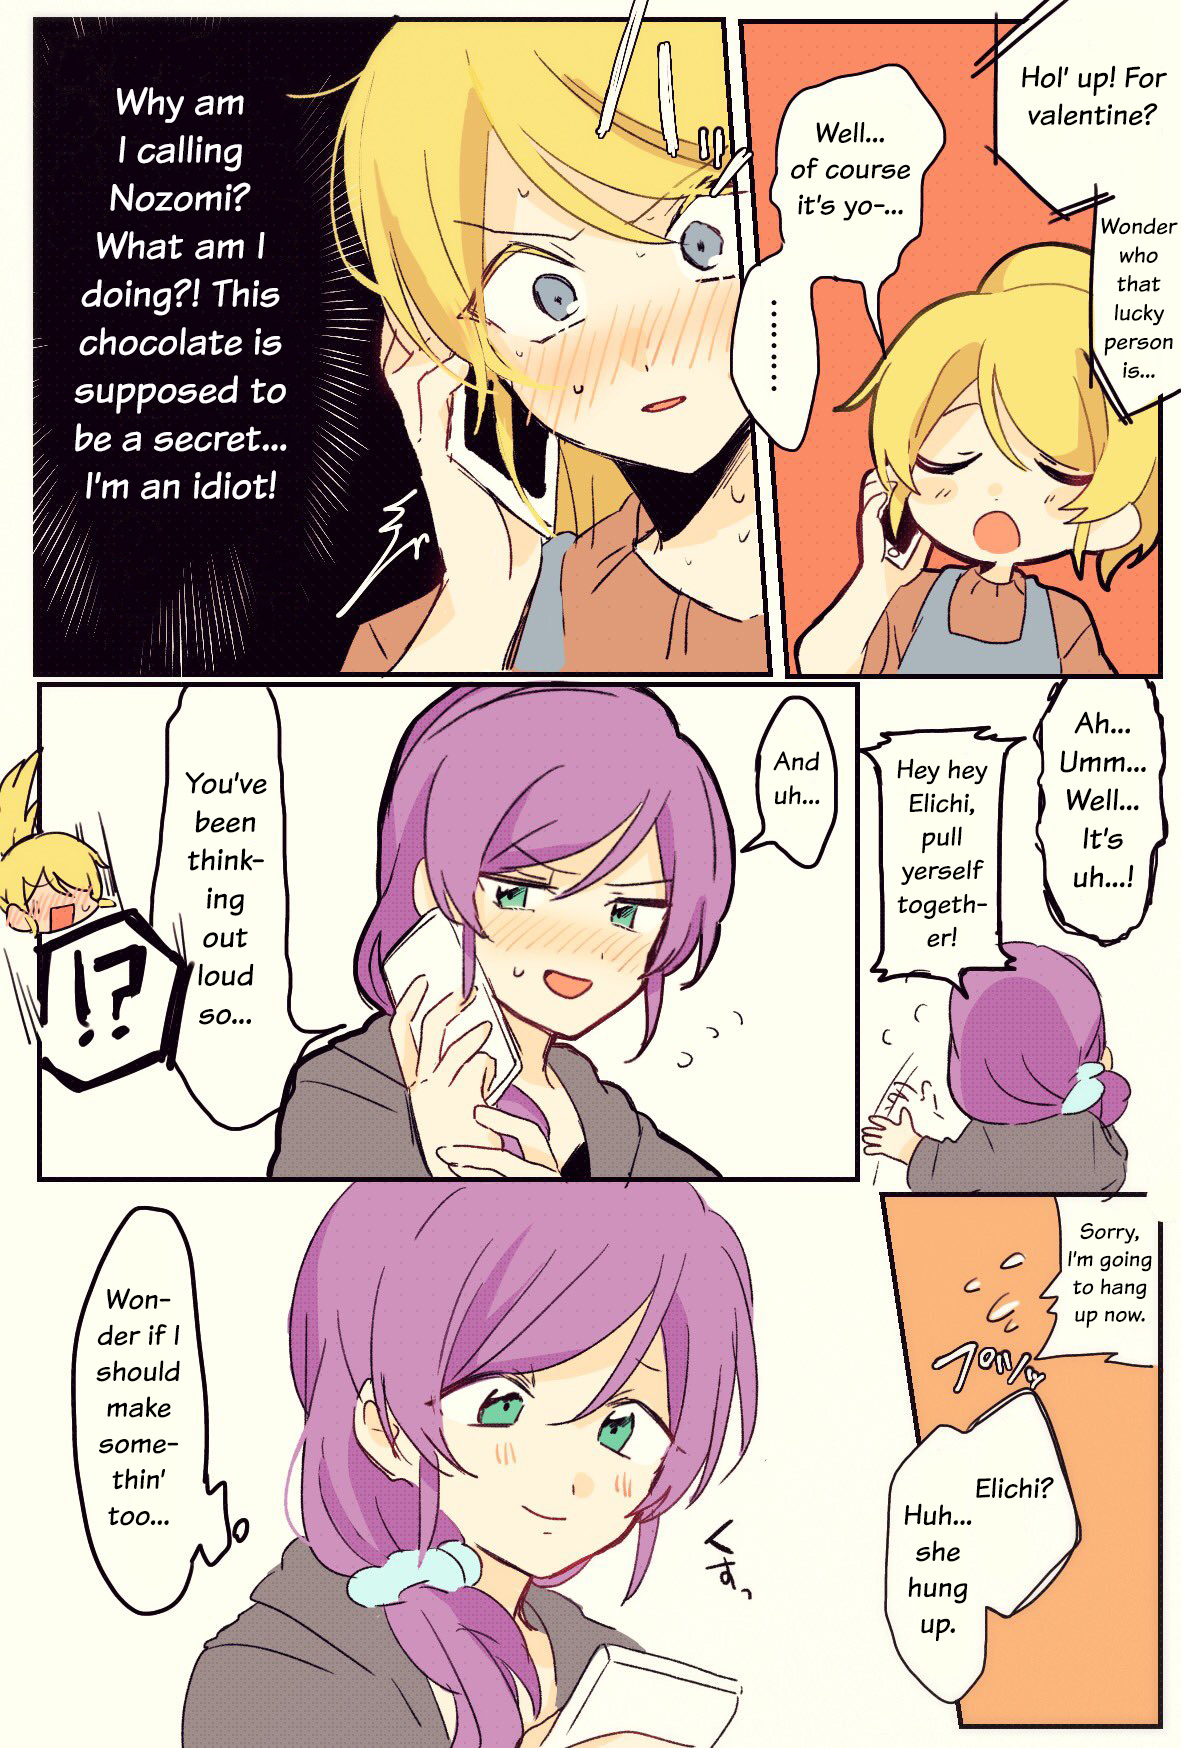 Nozoeli Valentine's Comic - Page 3